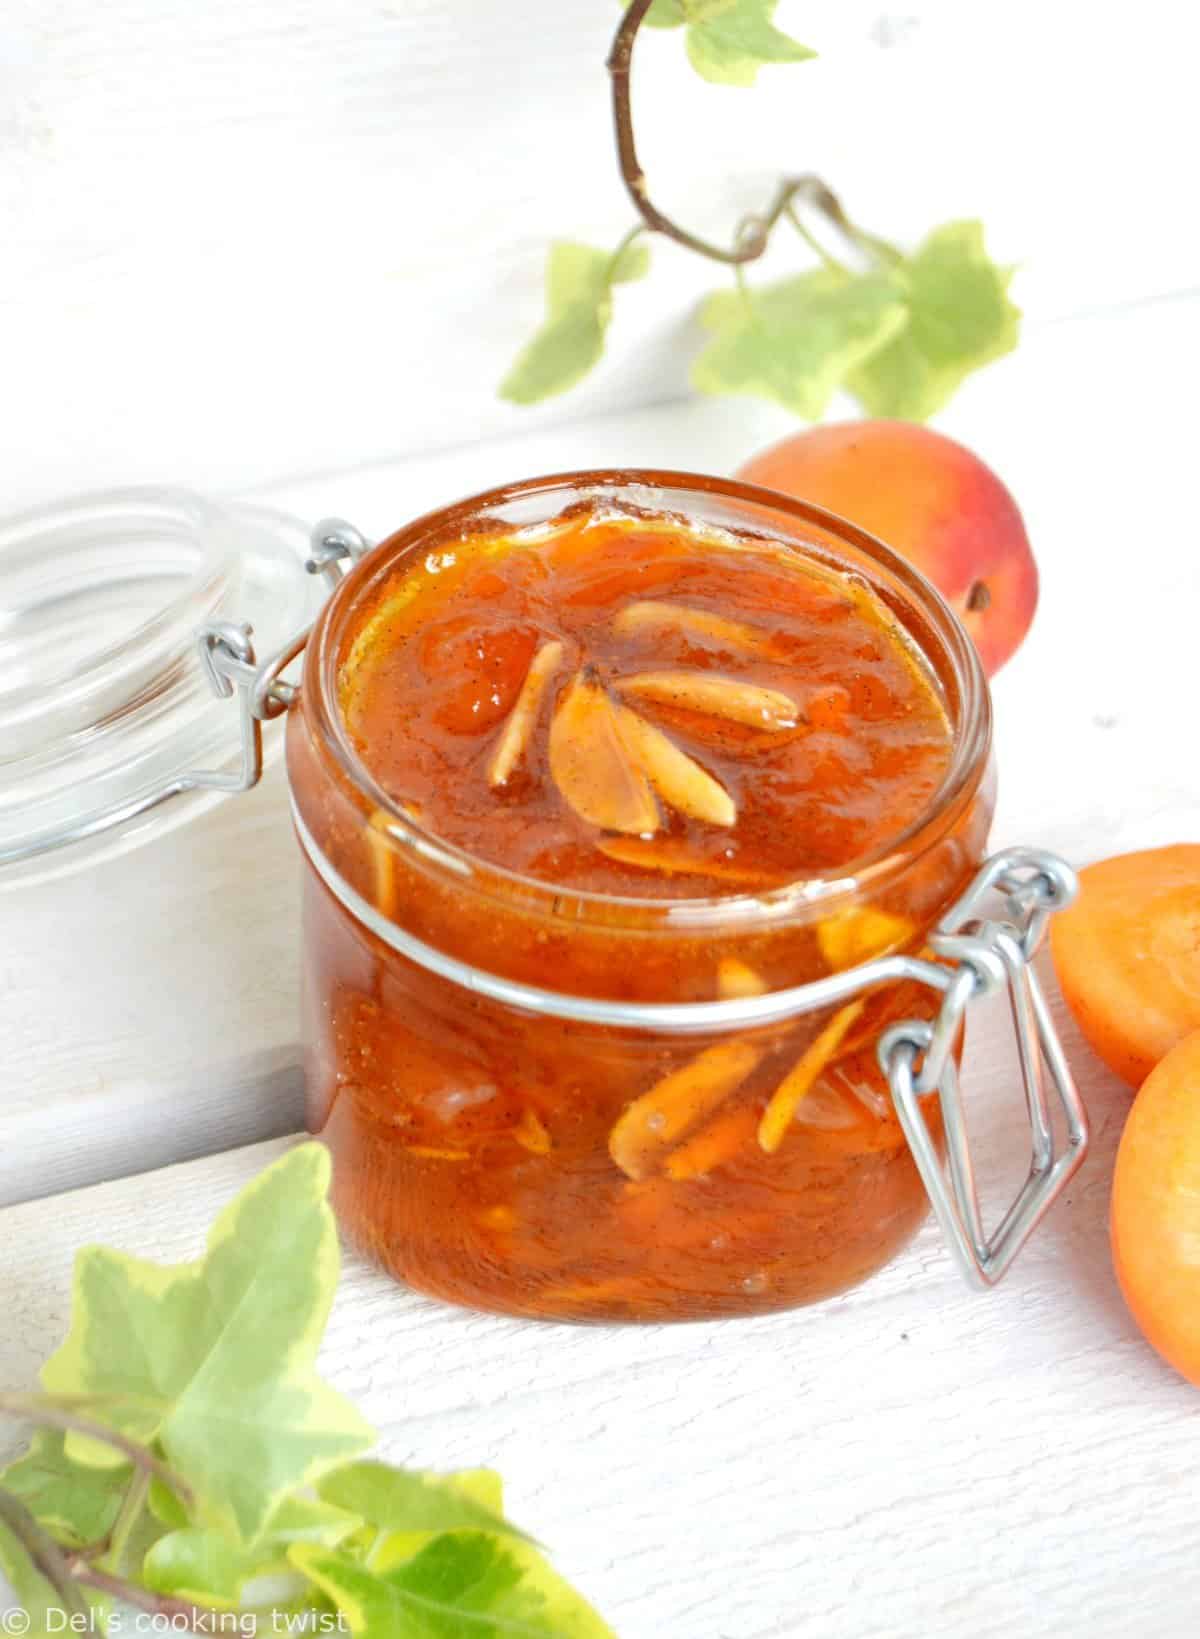 Almond Apricot Jam with Vanilla